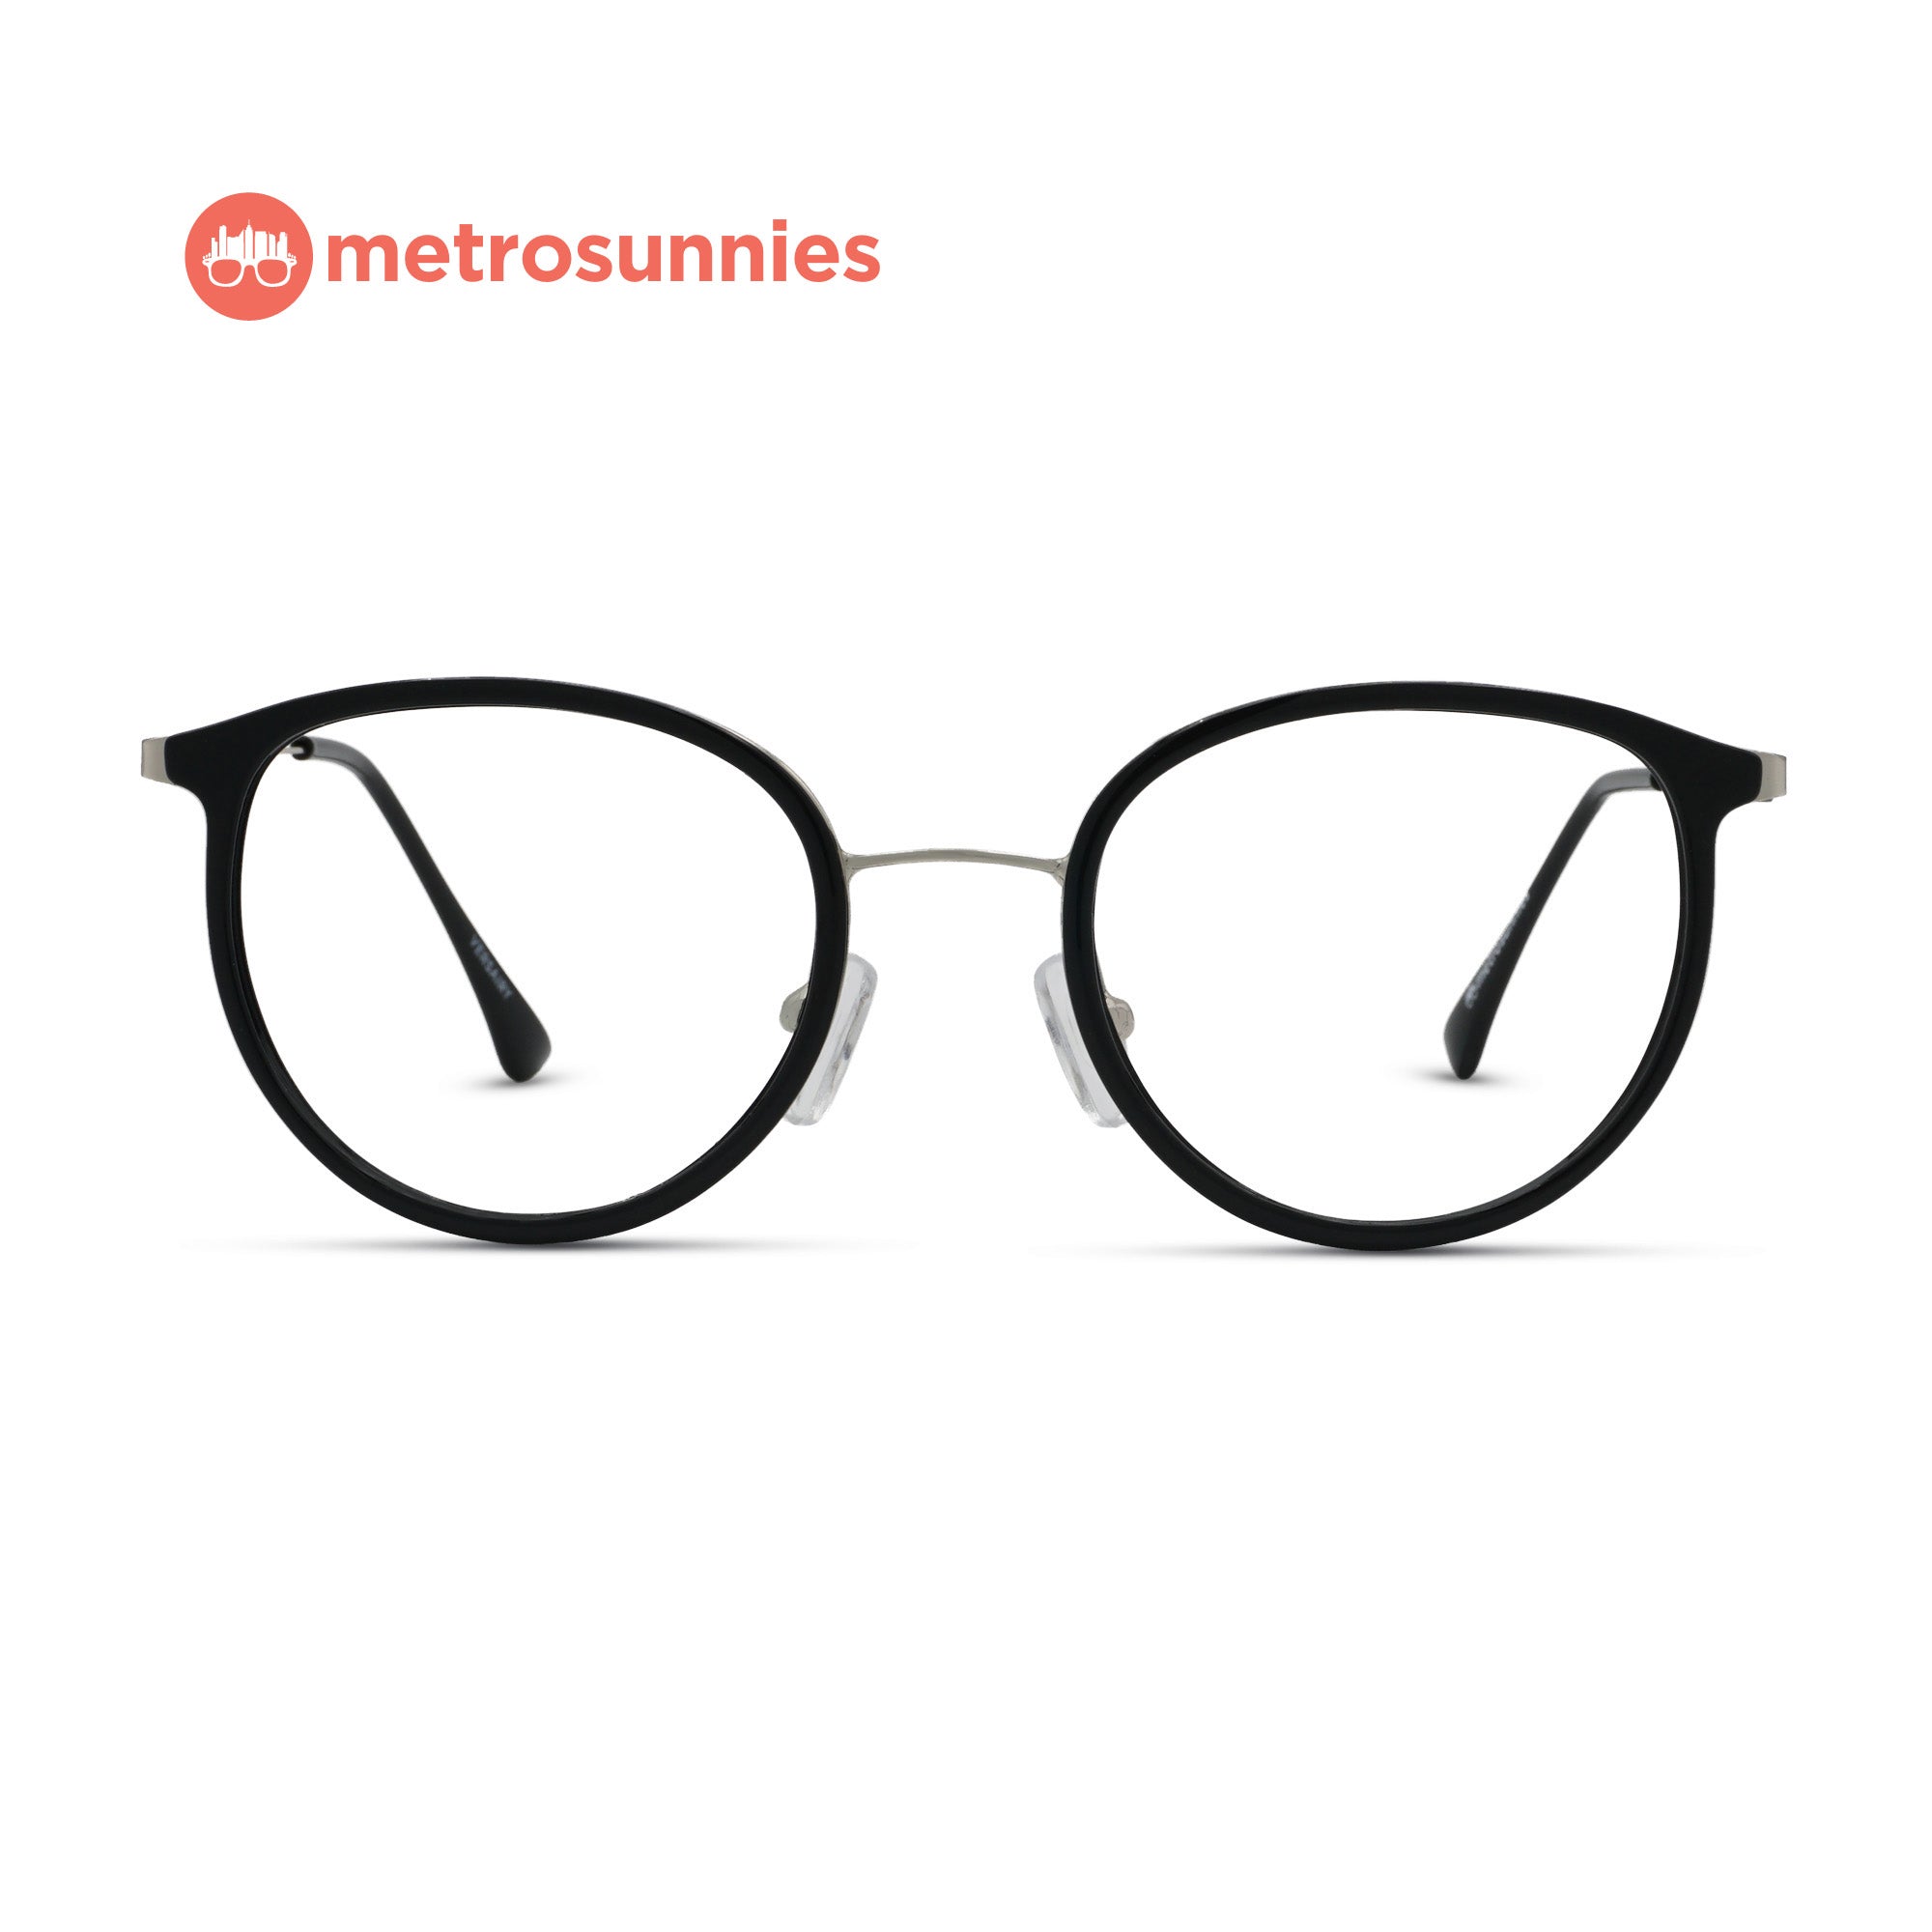 MetroSunnies Emma Specs (Black) / Replaceable Lens / Versairy Ultralight Weight / Eyeglasses